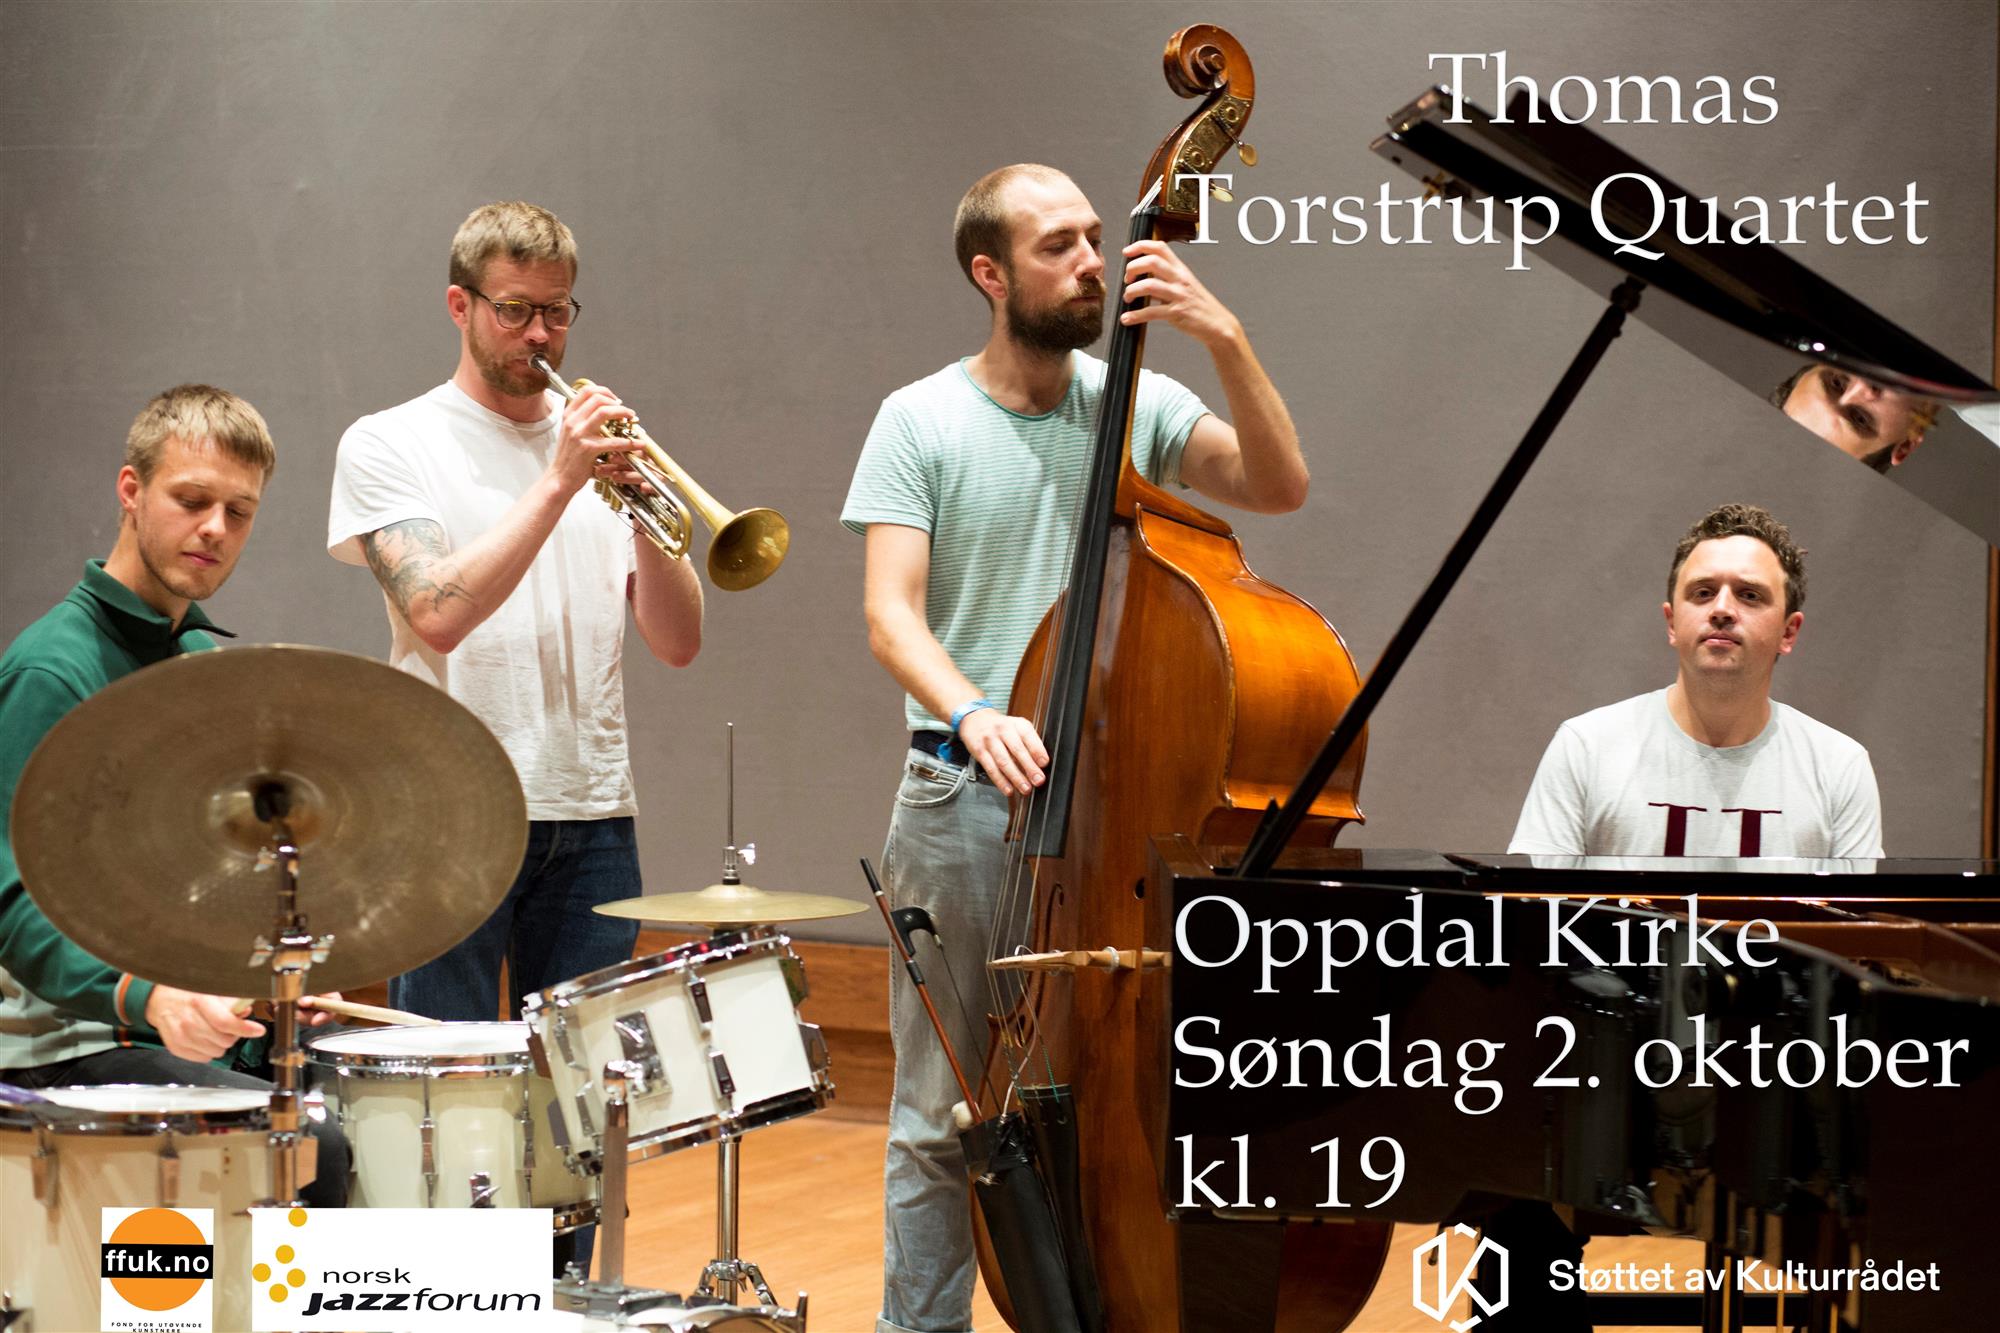 Thomas Torstrup Quartet